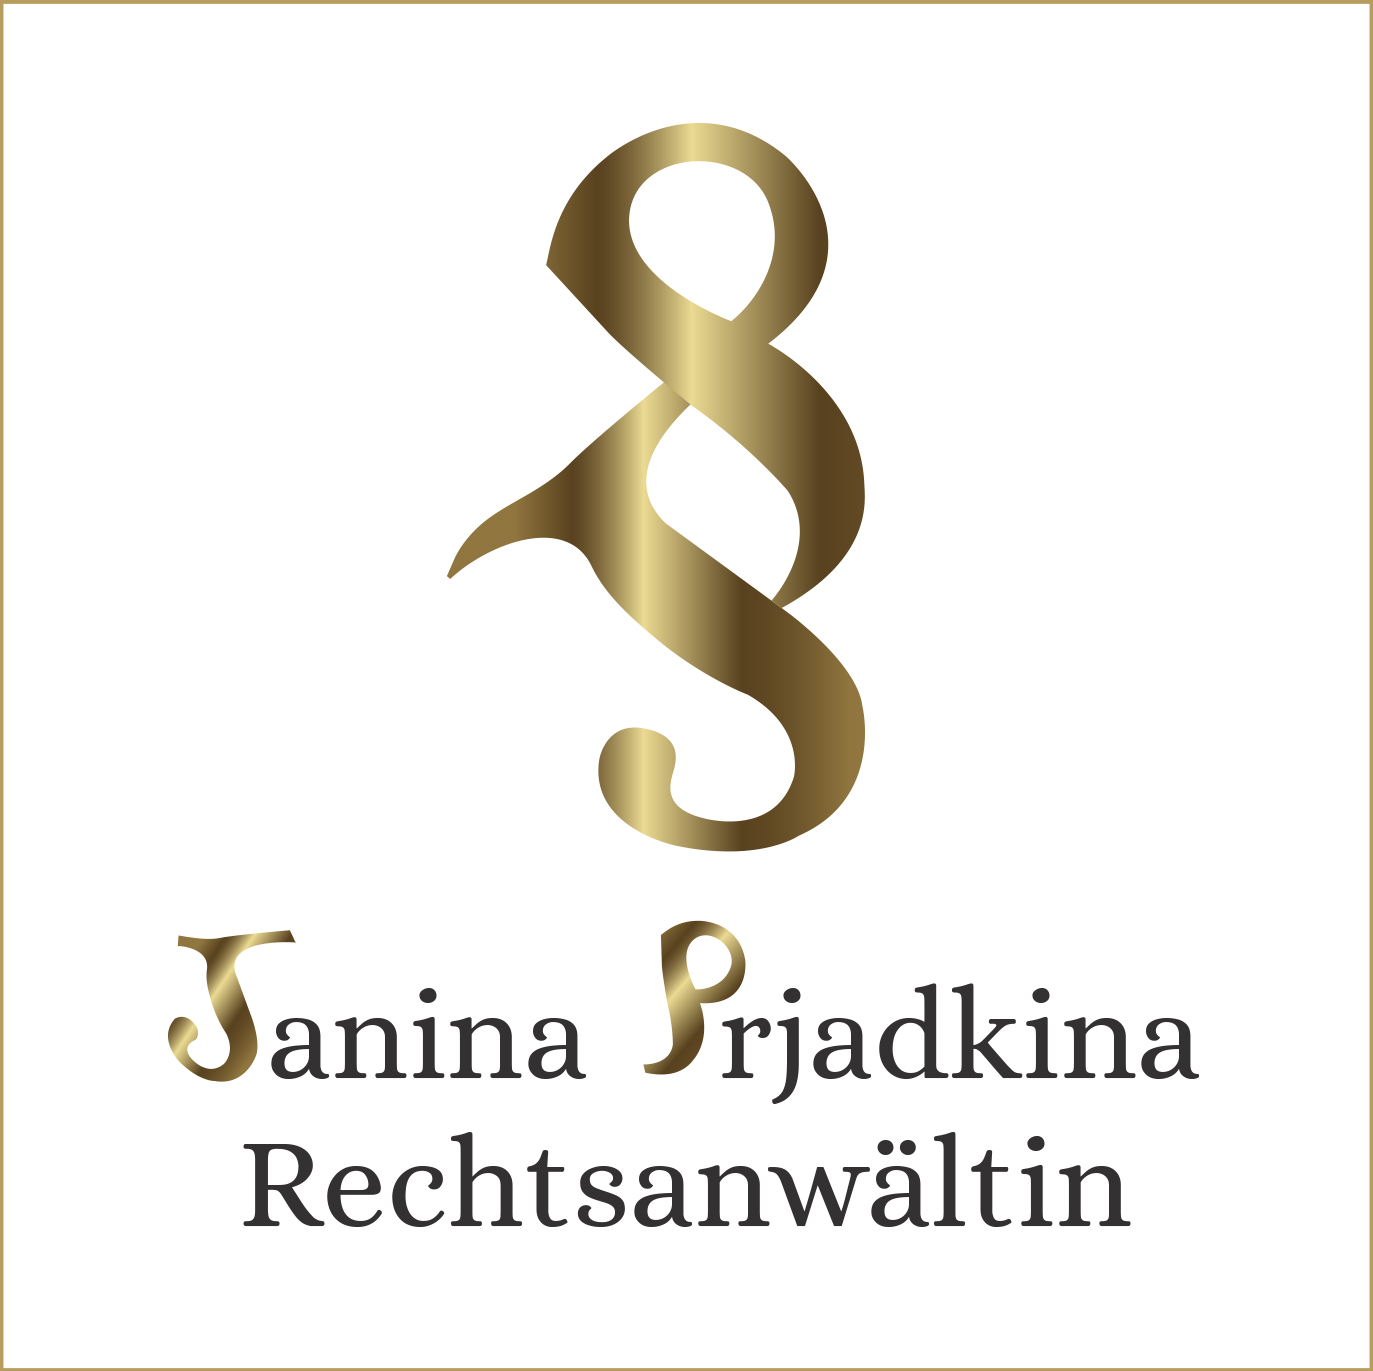 Janina Prjadkina